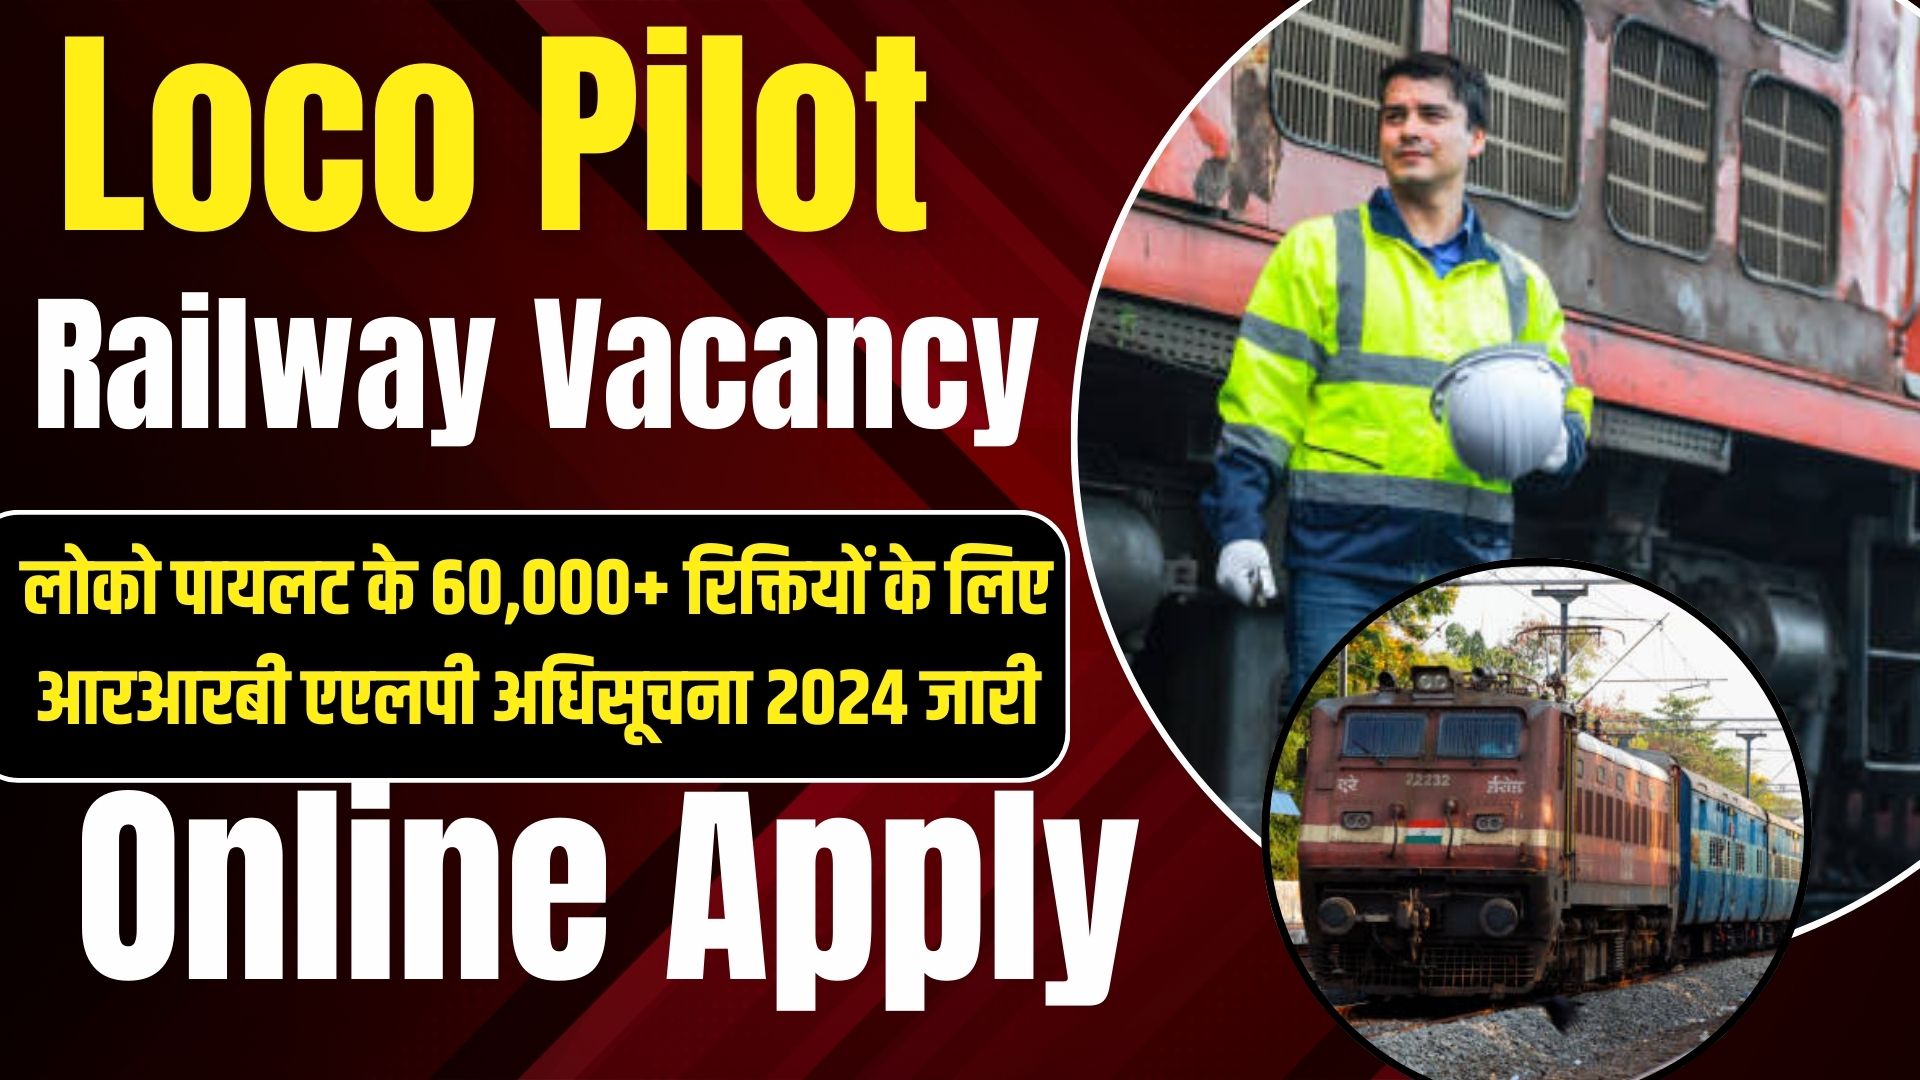 Railway Loco Pilot Recruitment 2024 (ALP) Online Apply, Vacancies